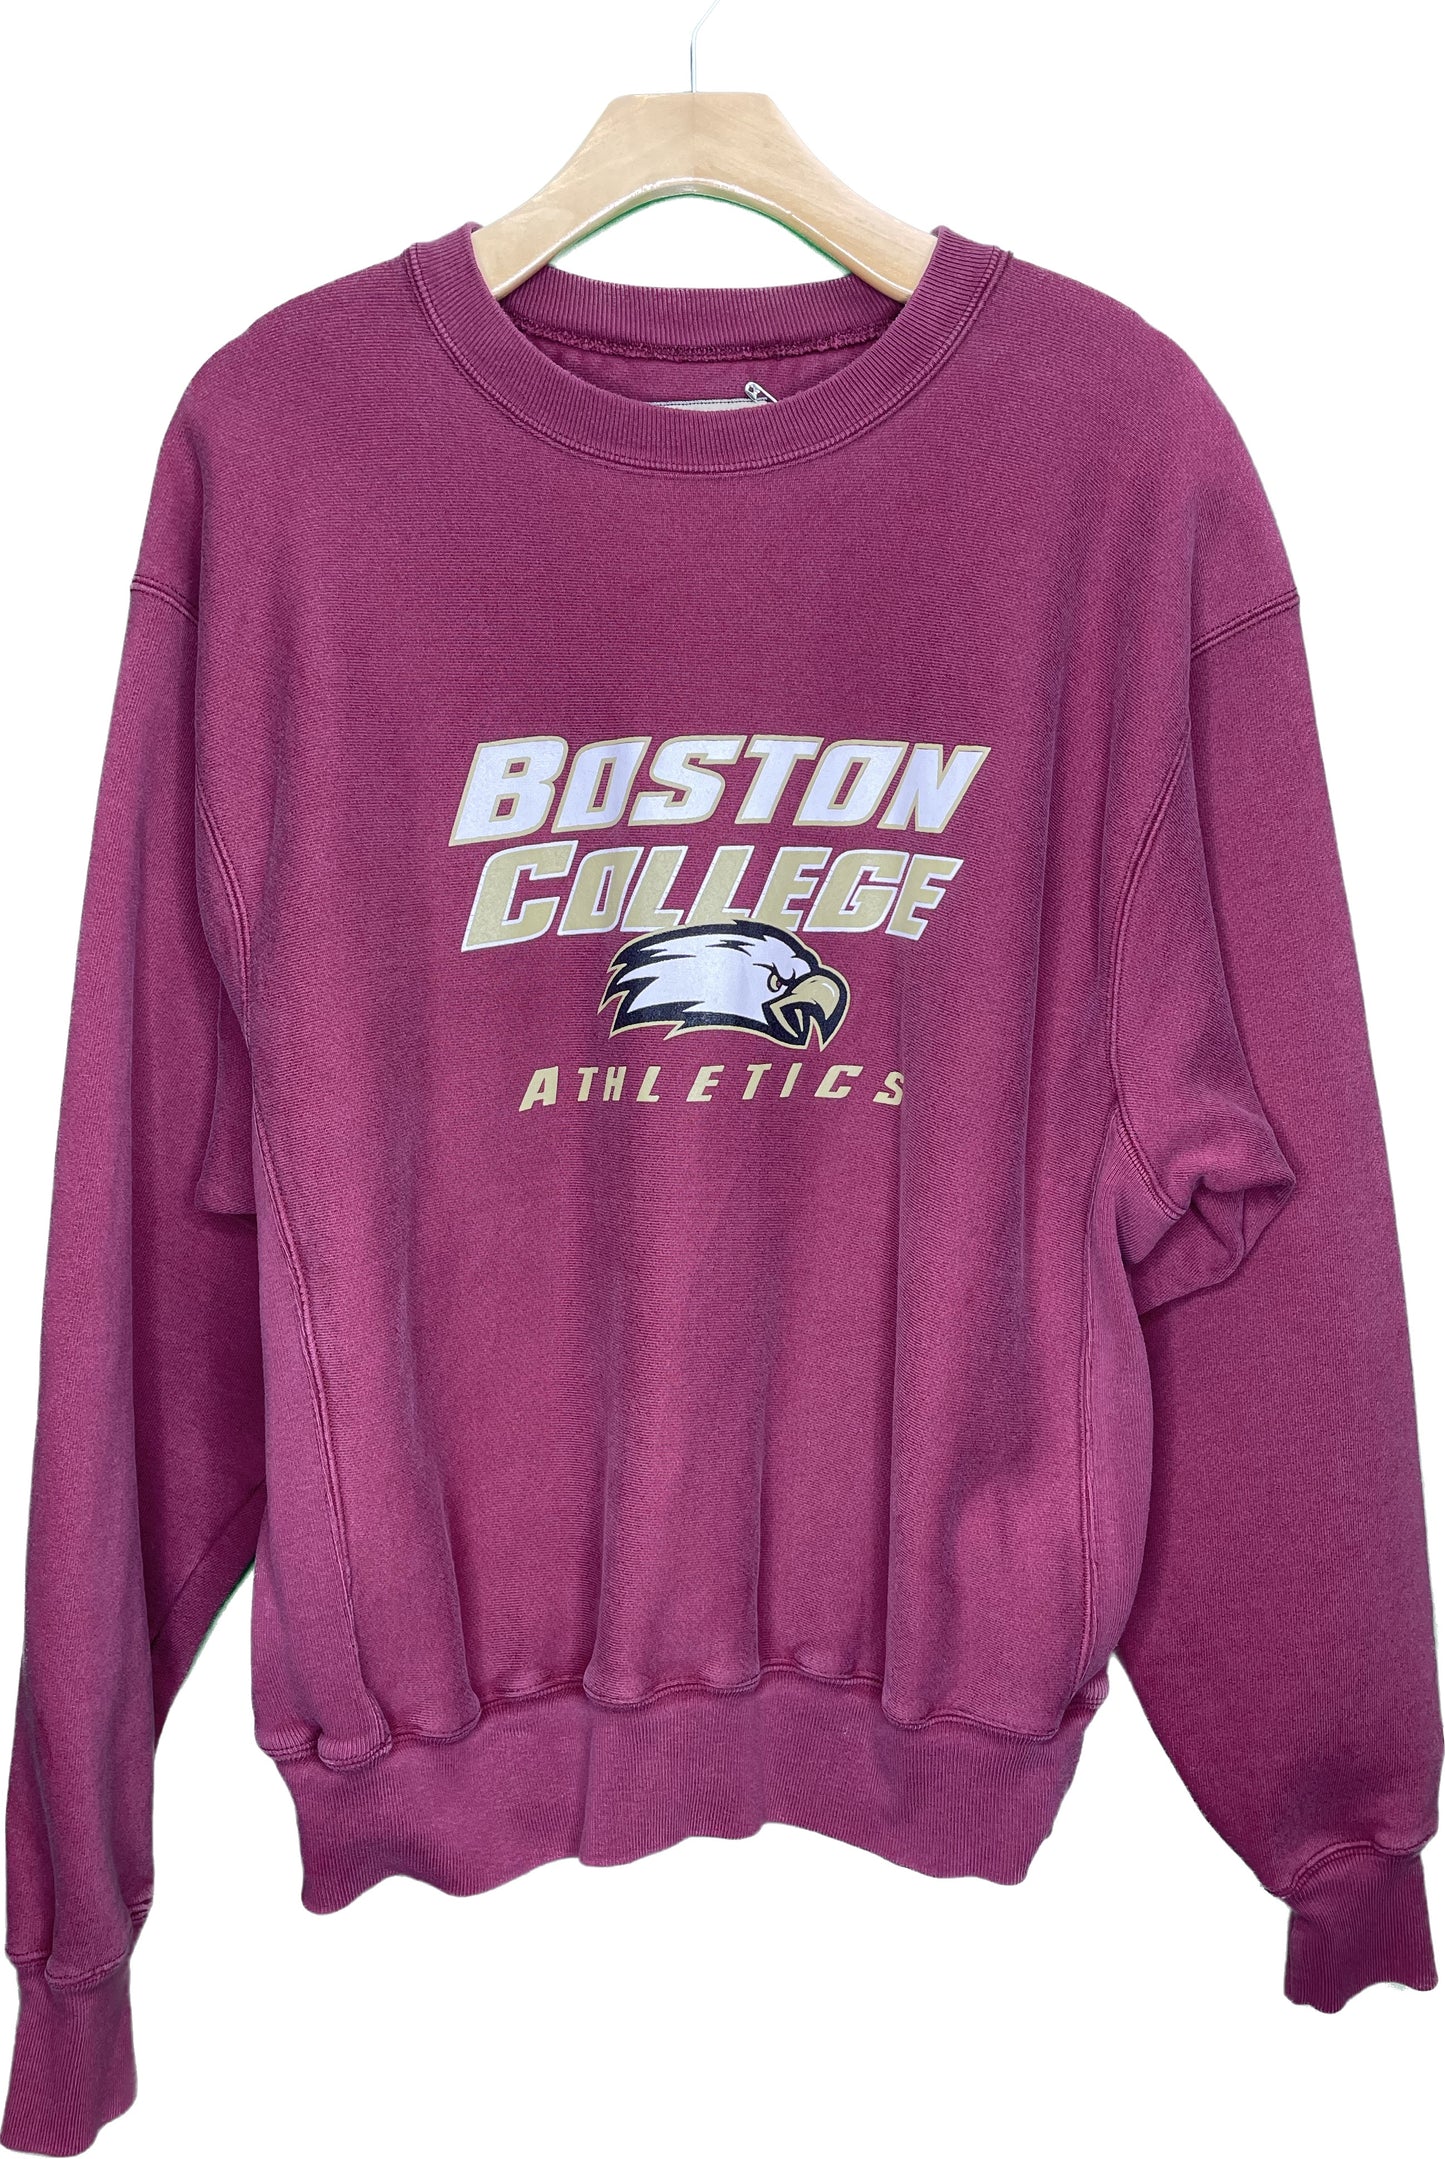 Vintage XL/2XL Boston College Athletics Sweatshirt